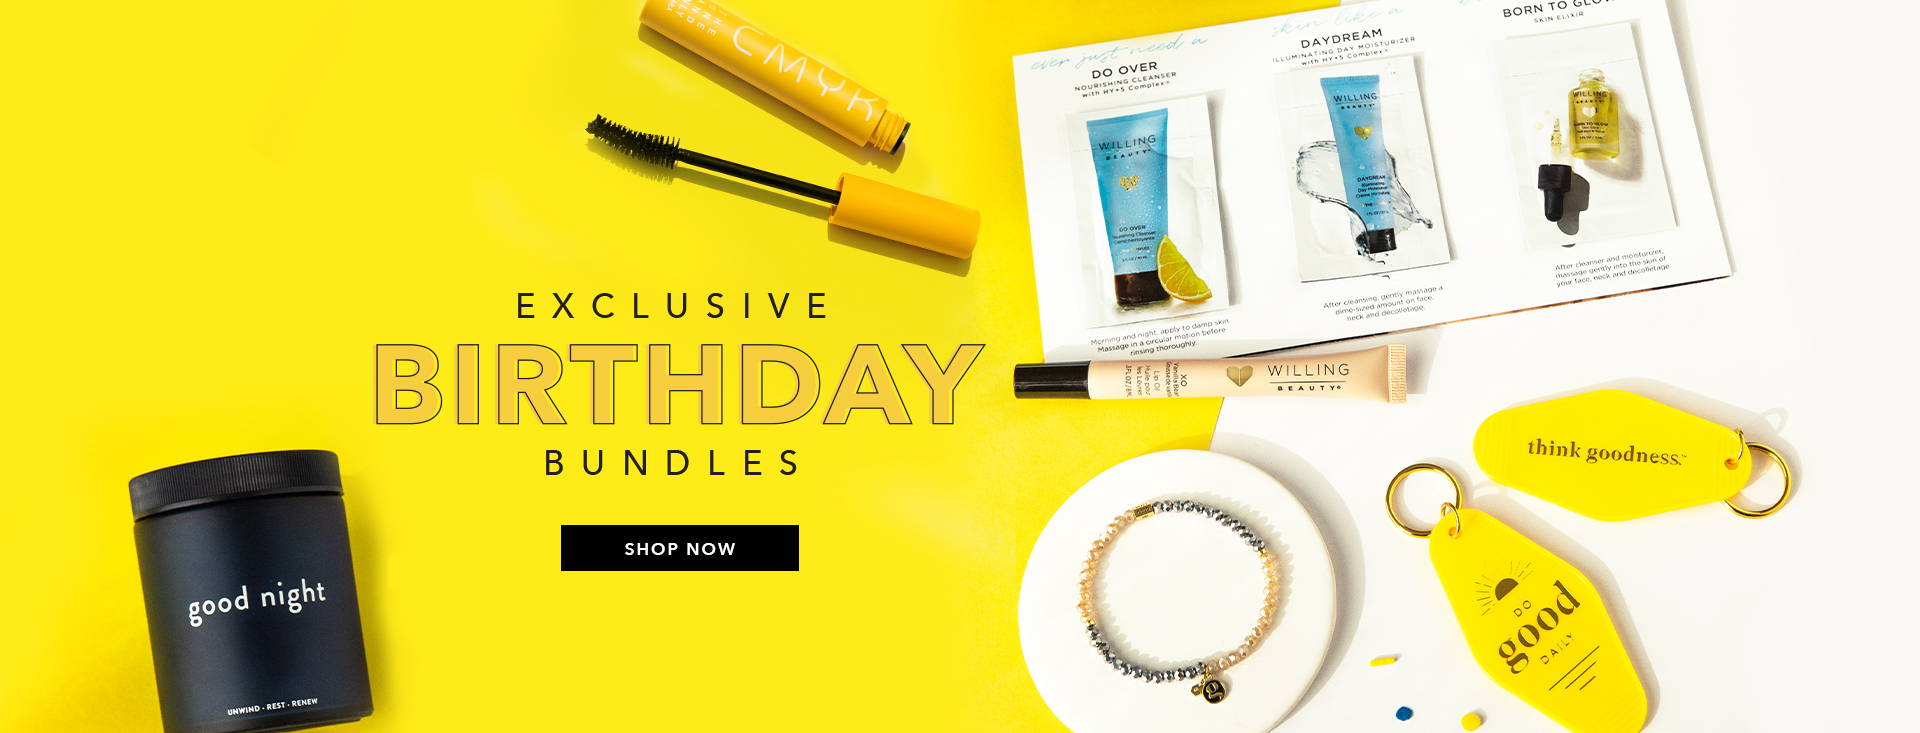 Think Goodness Birthday product Bundles